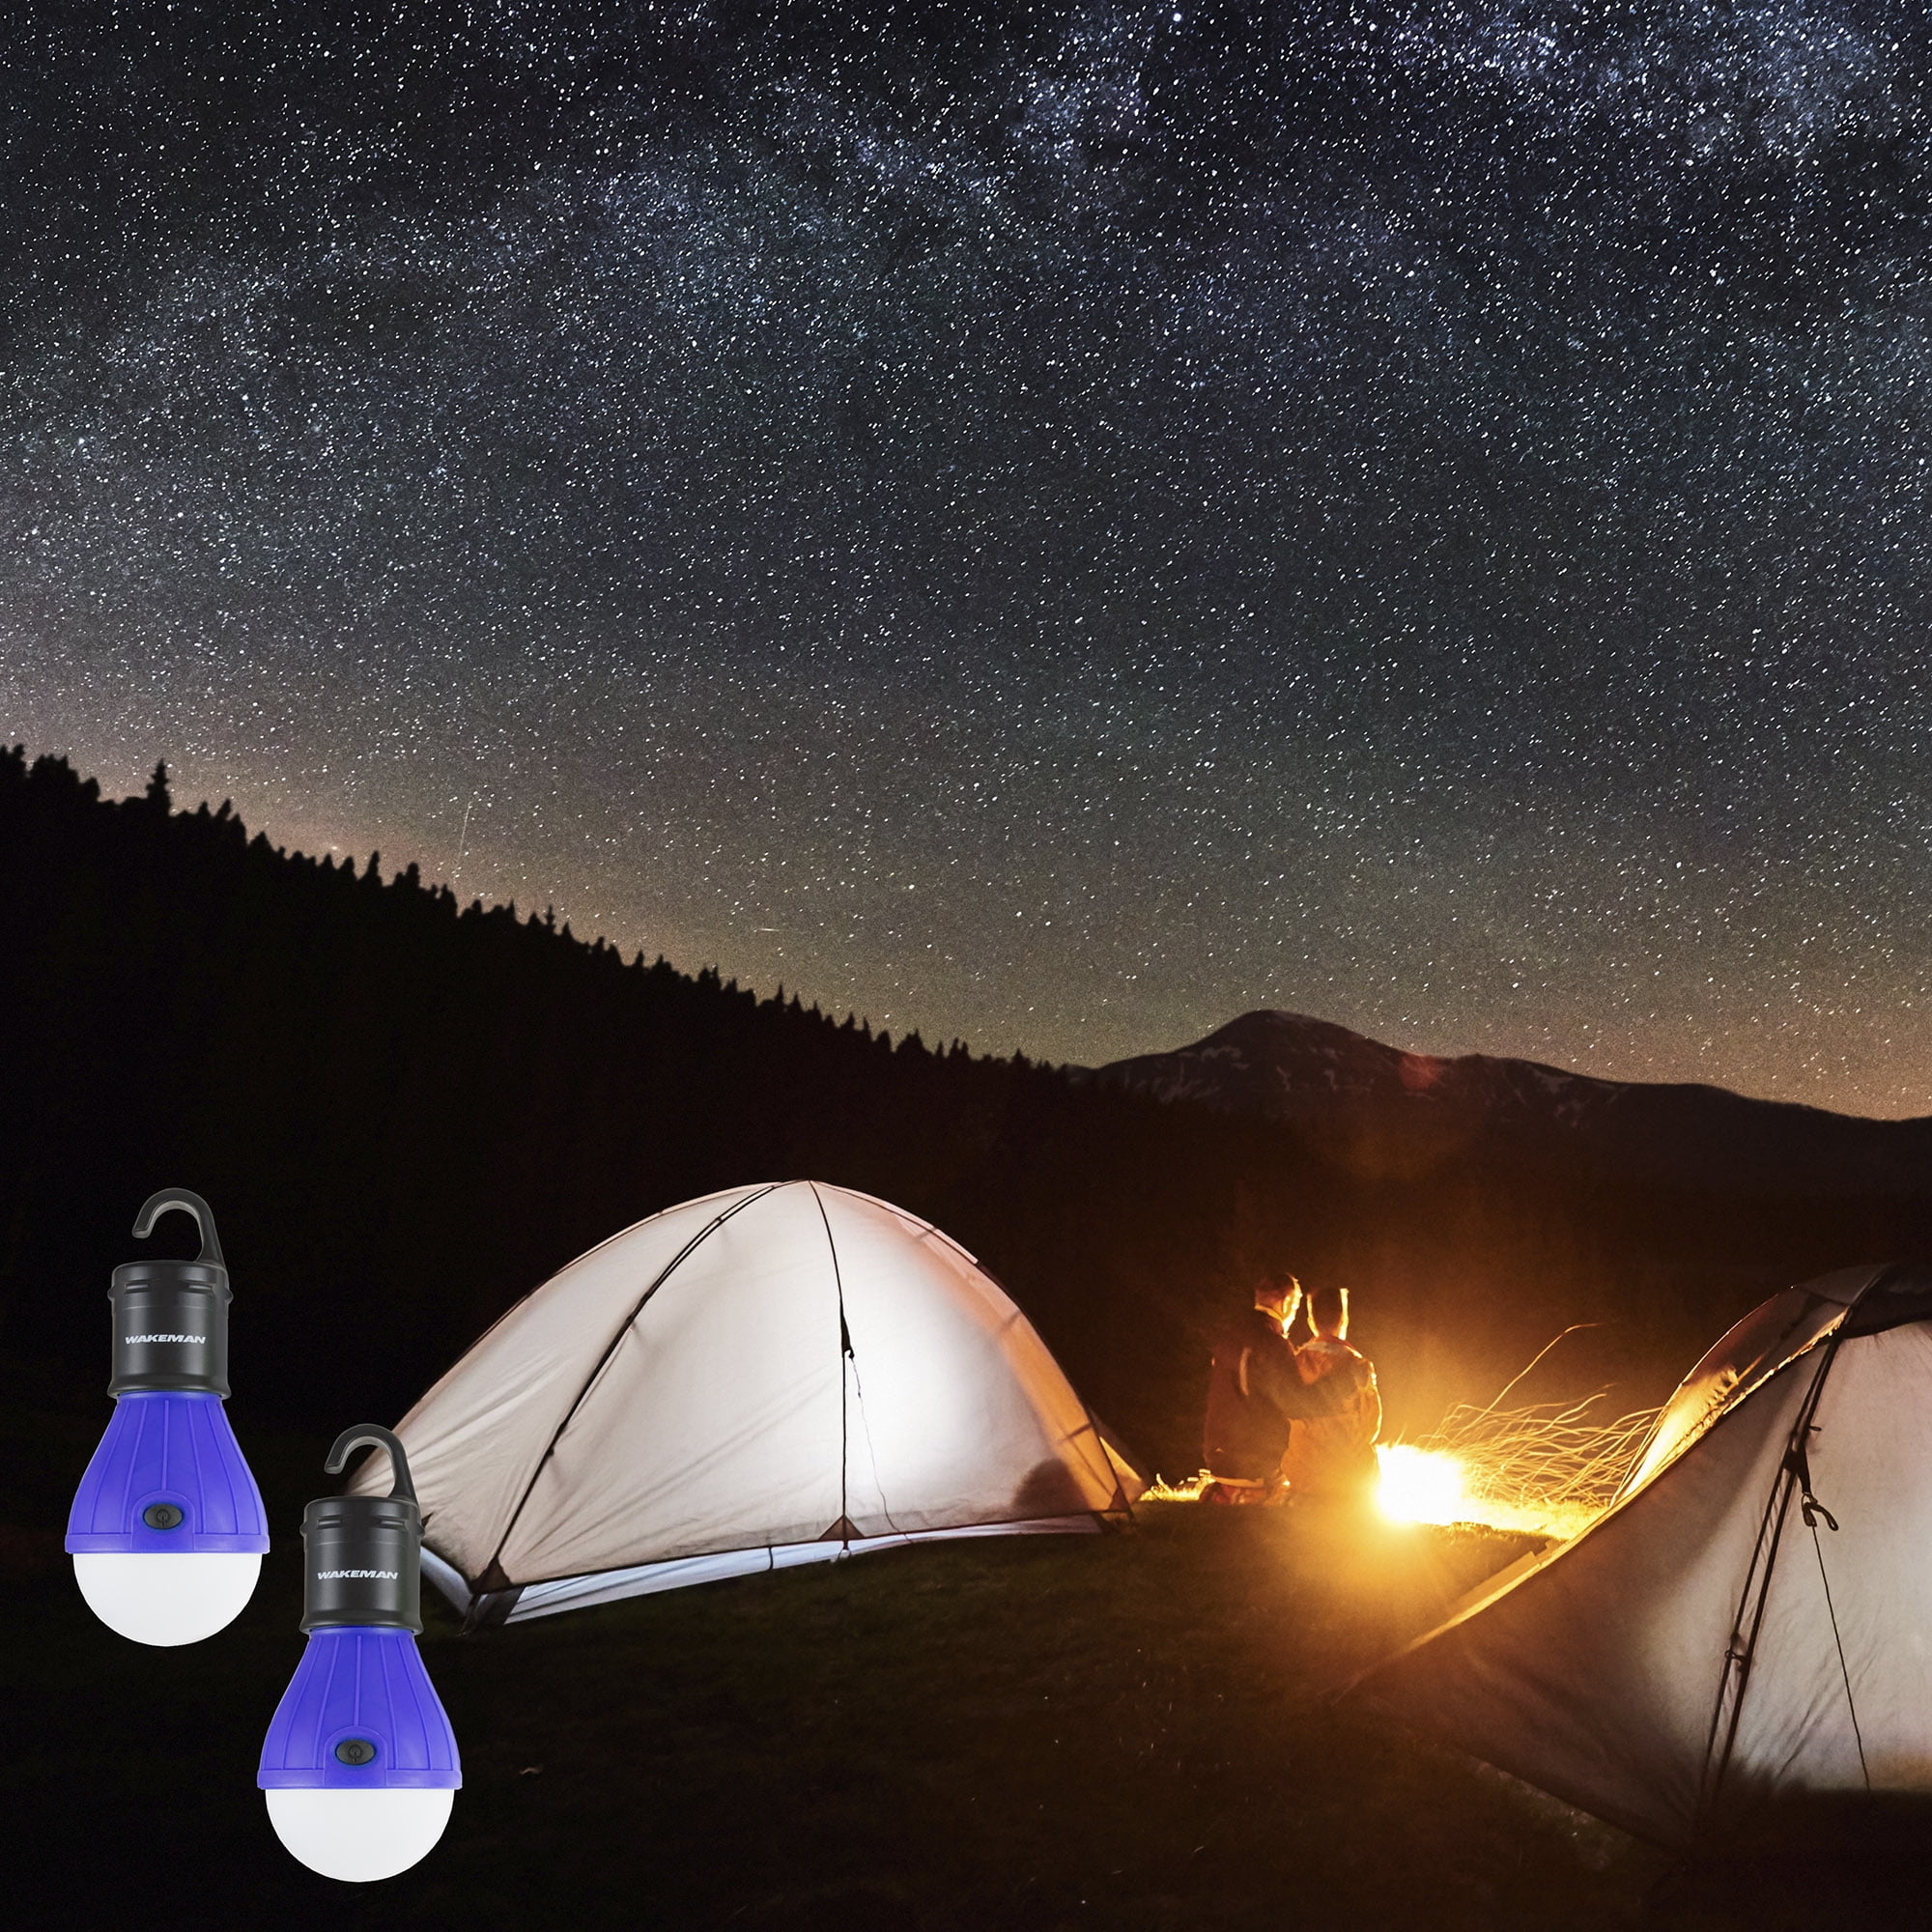 Twilights Camp Lights - Colorful LED Camping Lights